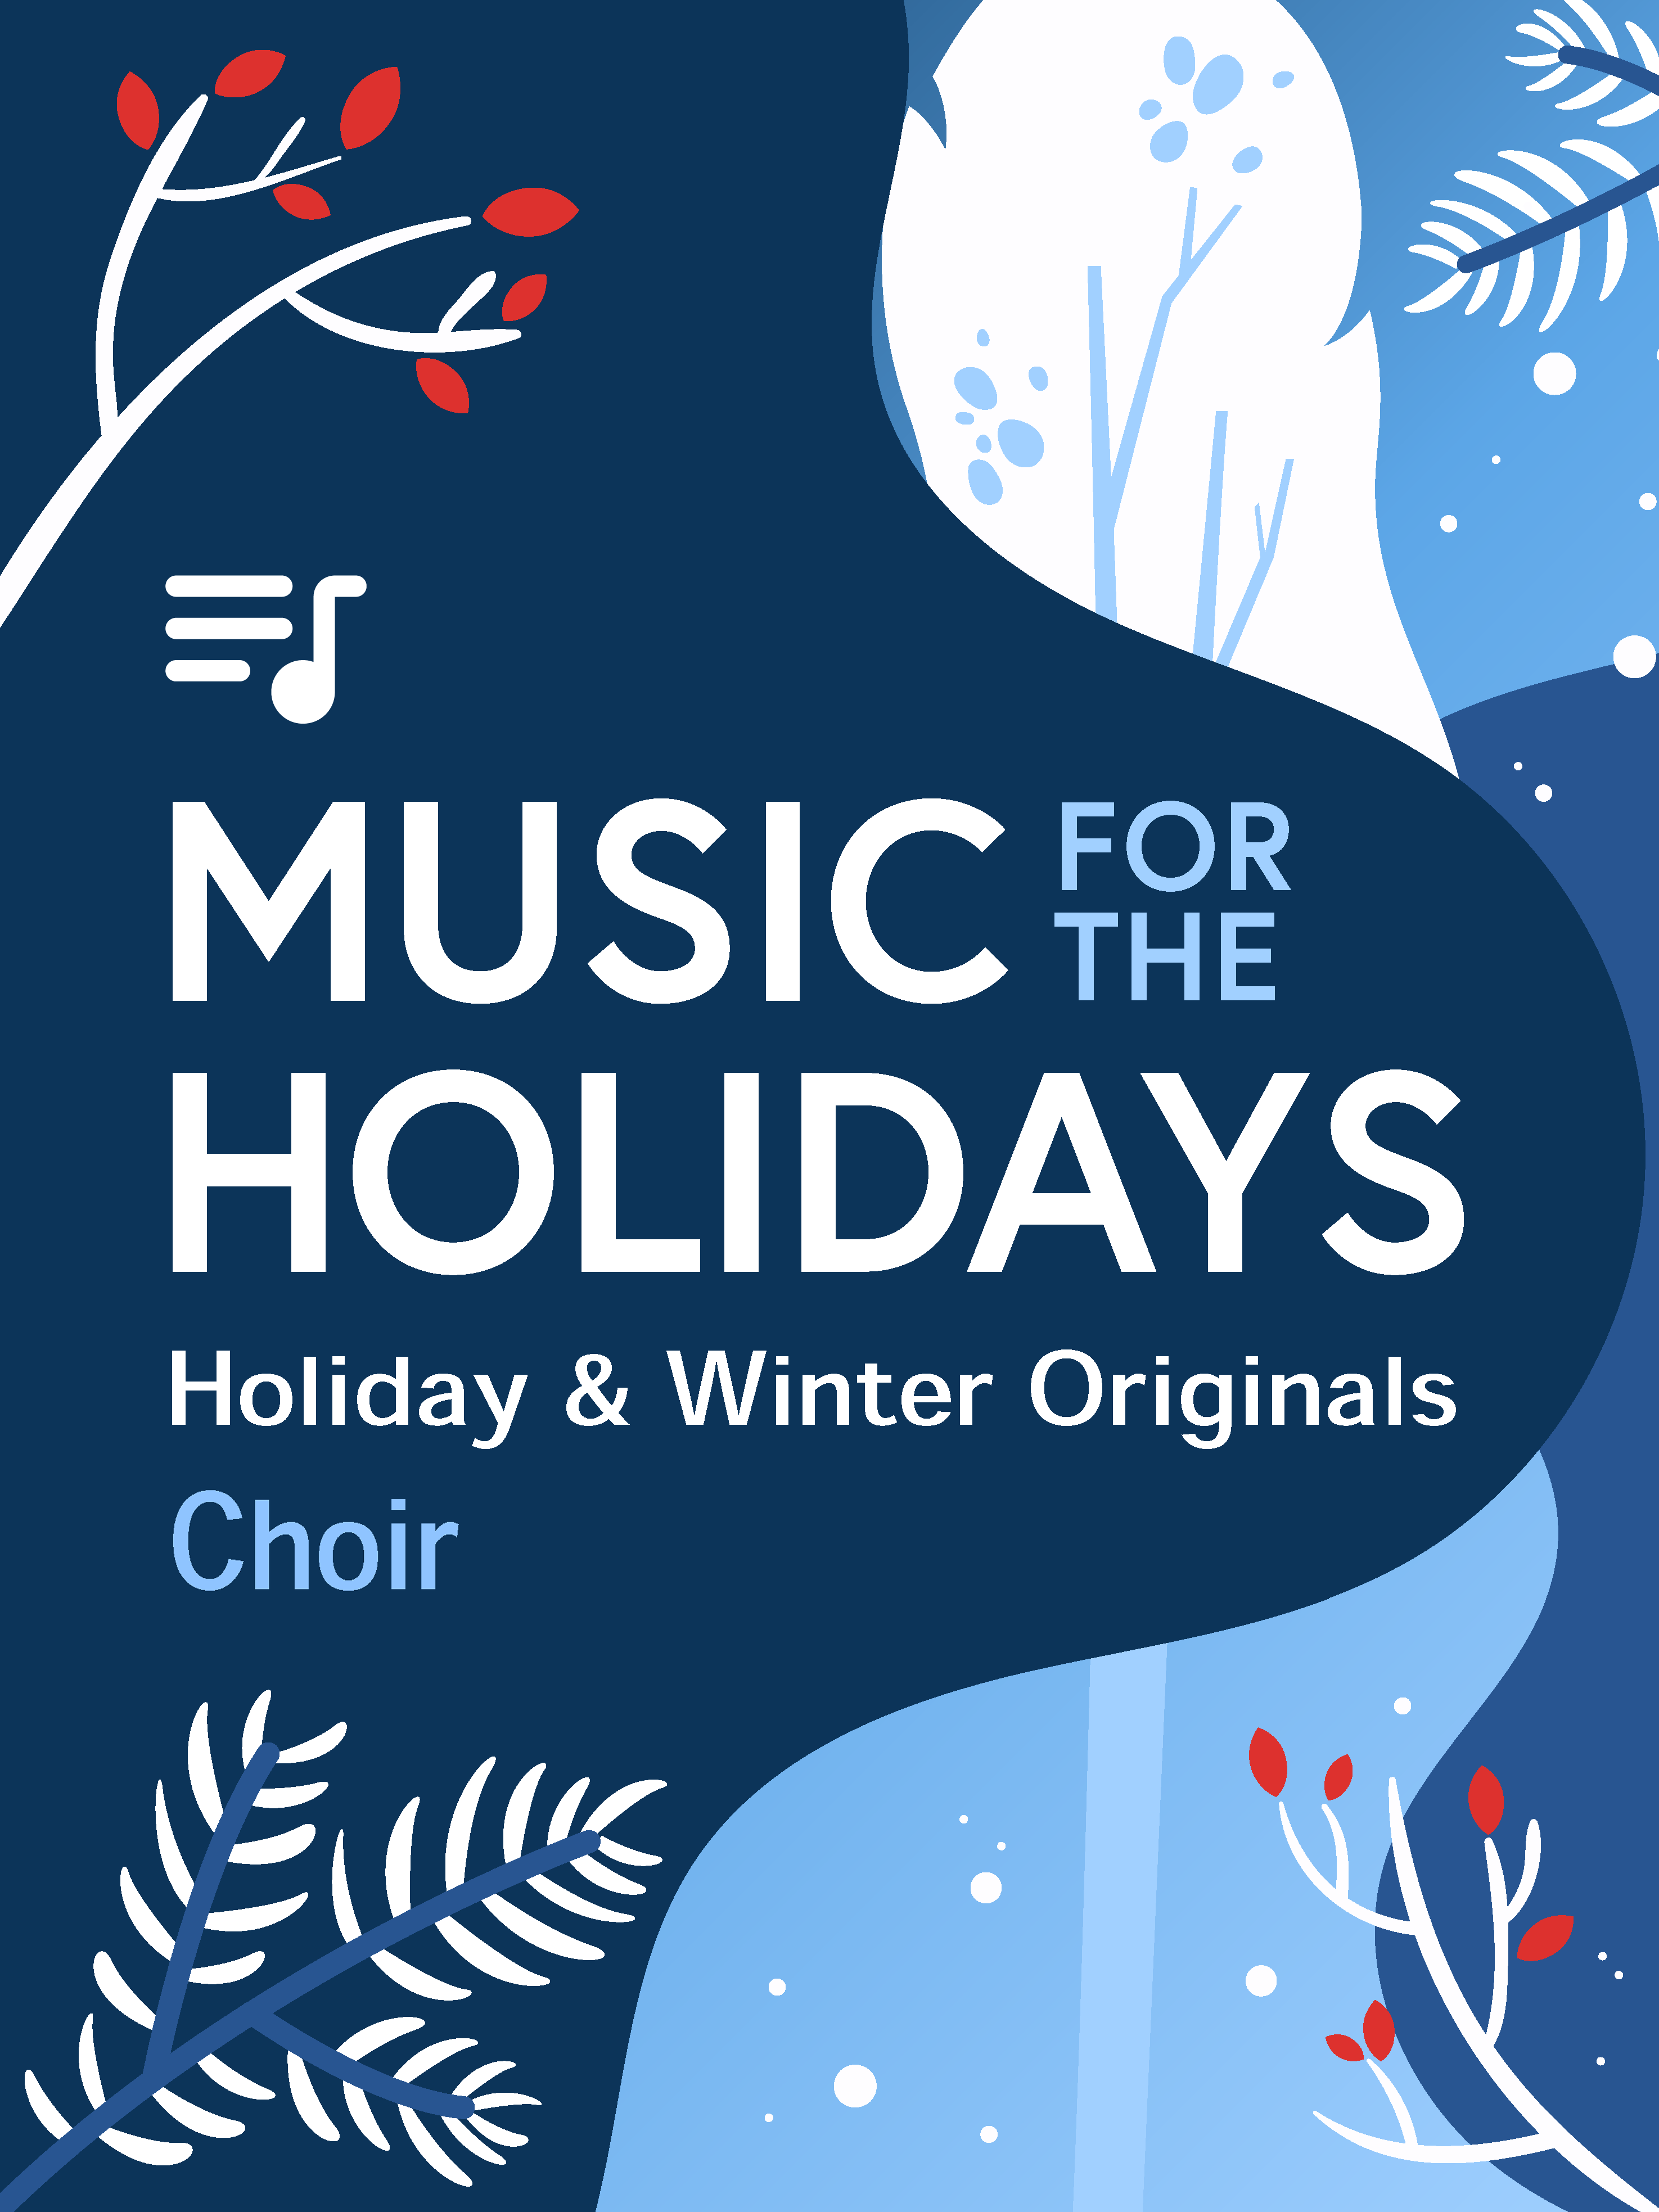 Holiday & Winter choir